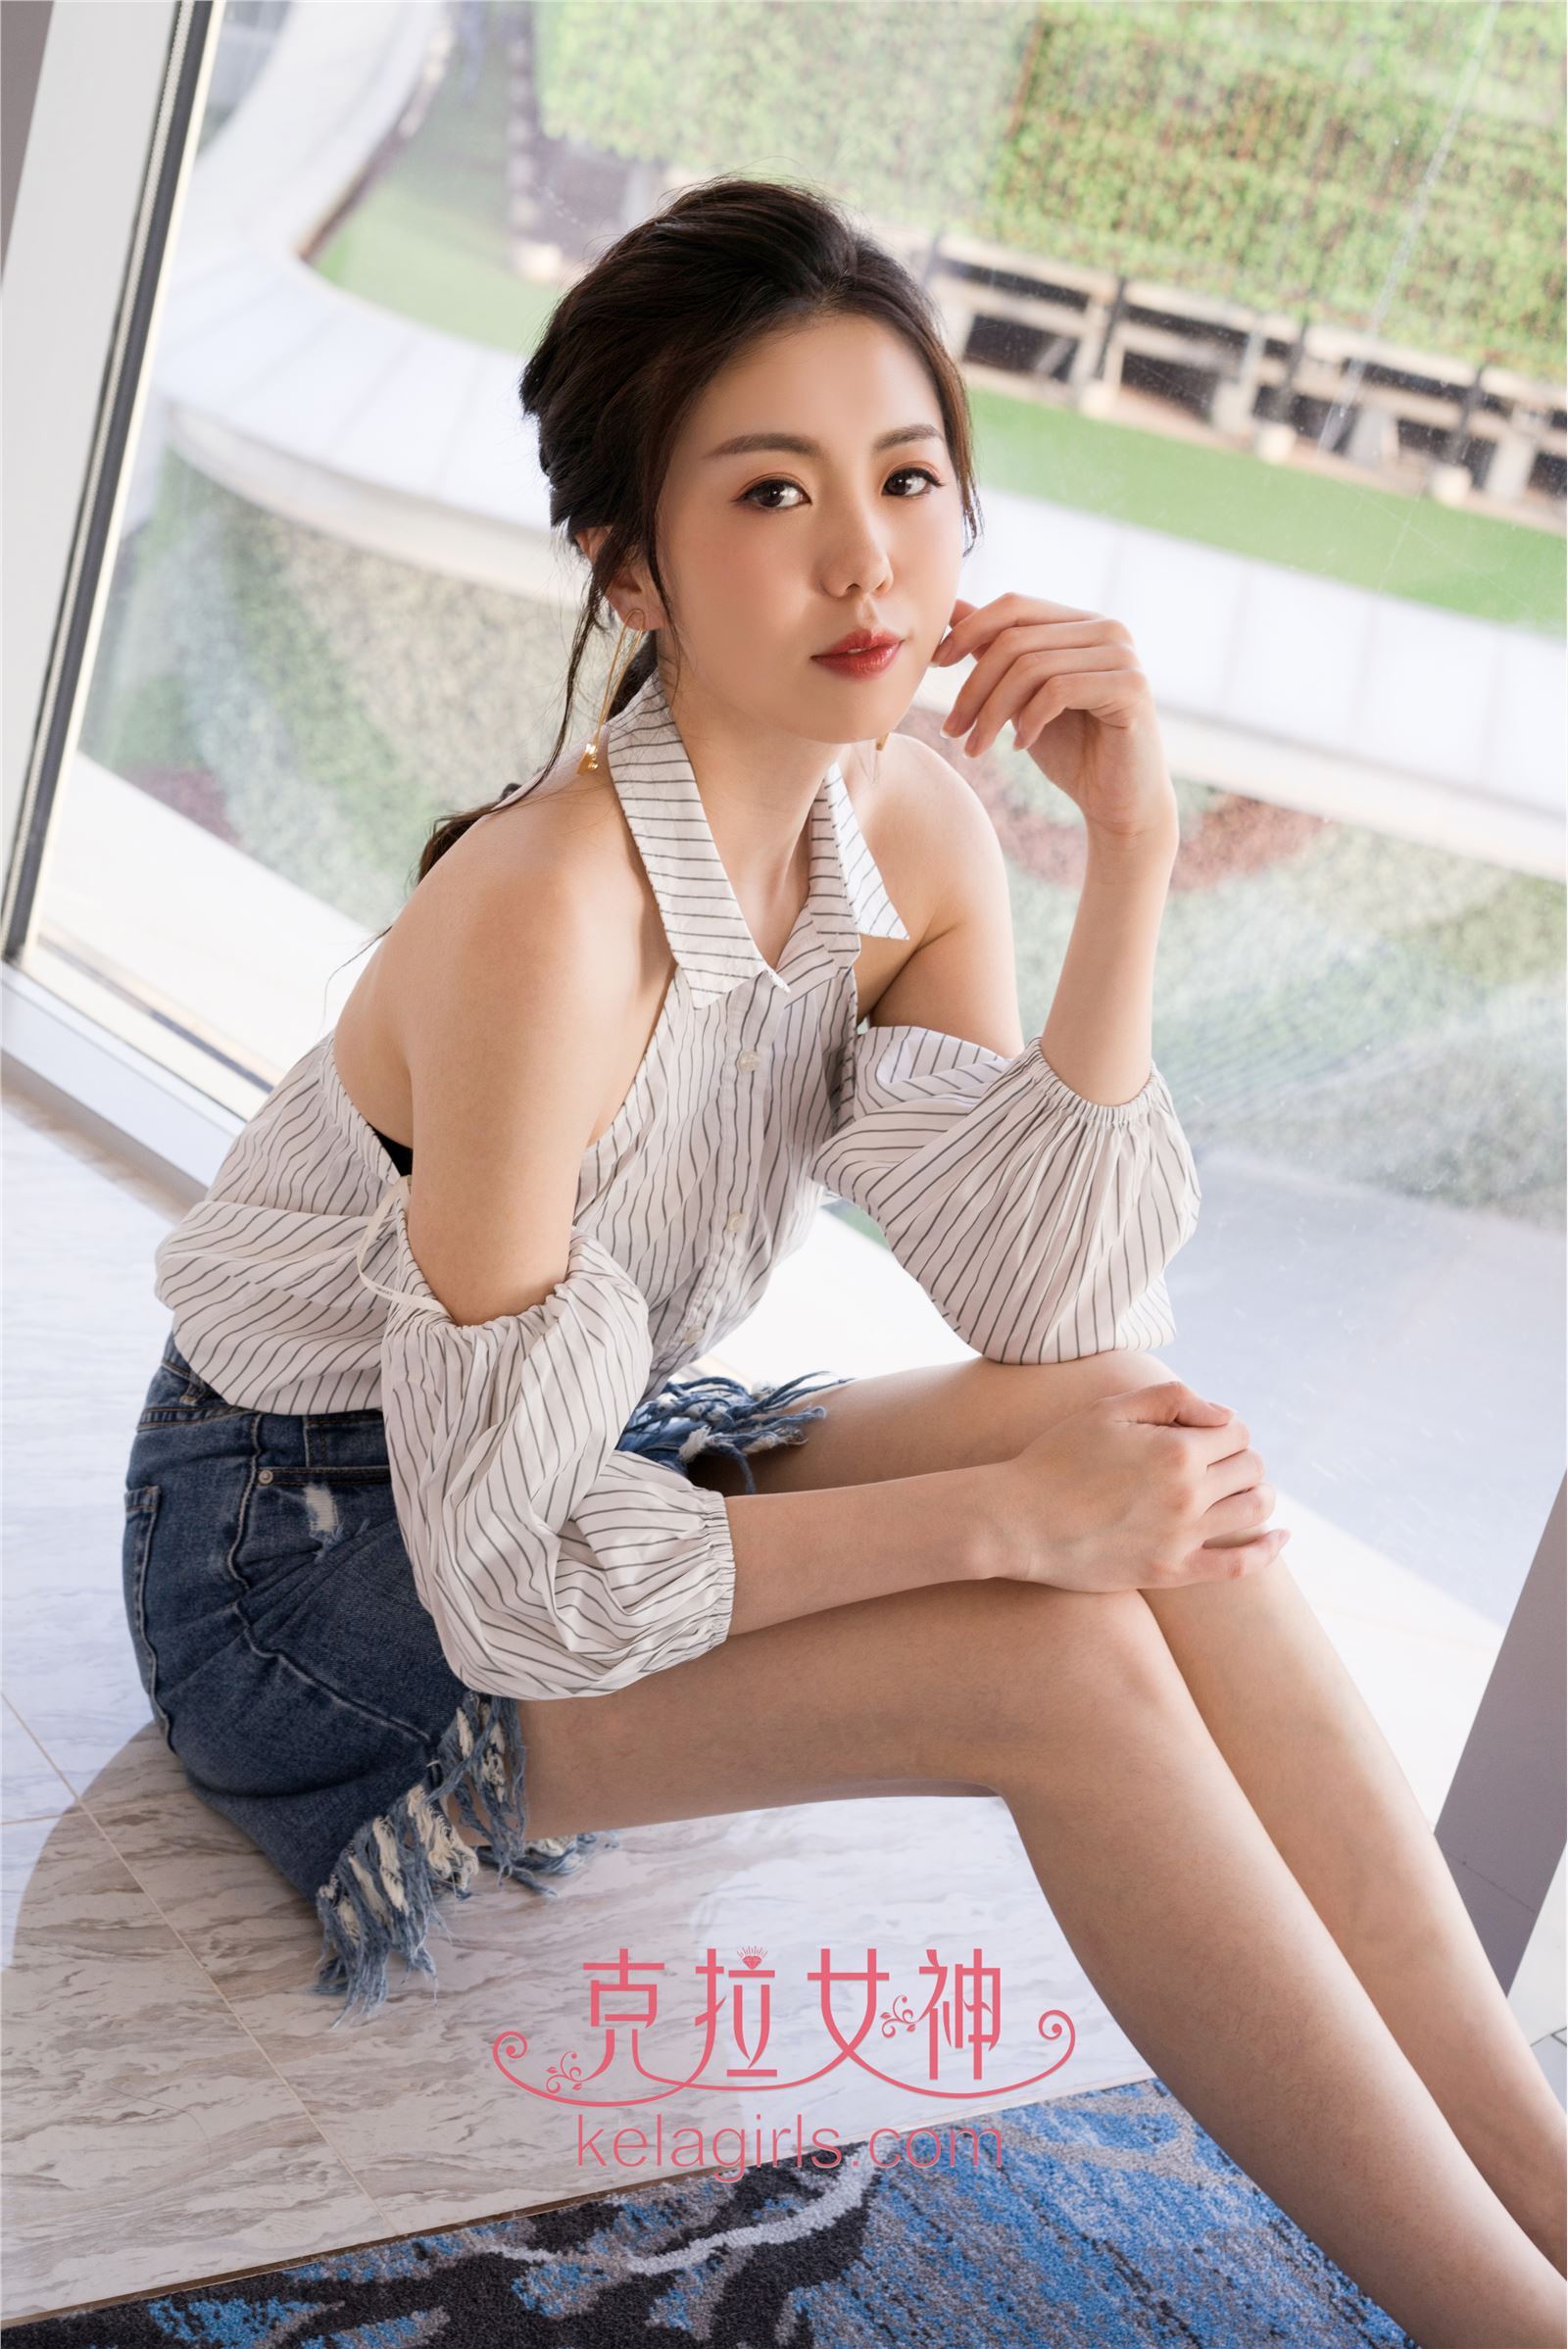 [Kela girls] Yunfei, May 28, 2018